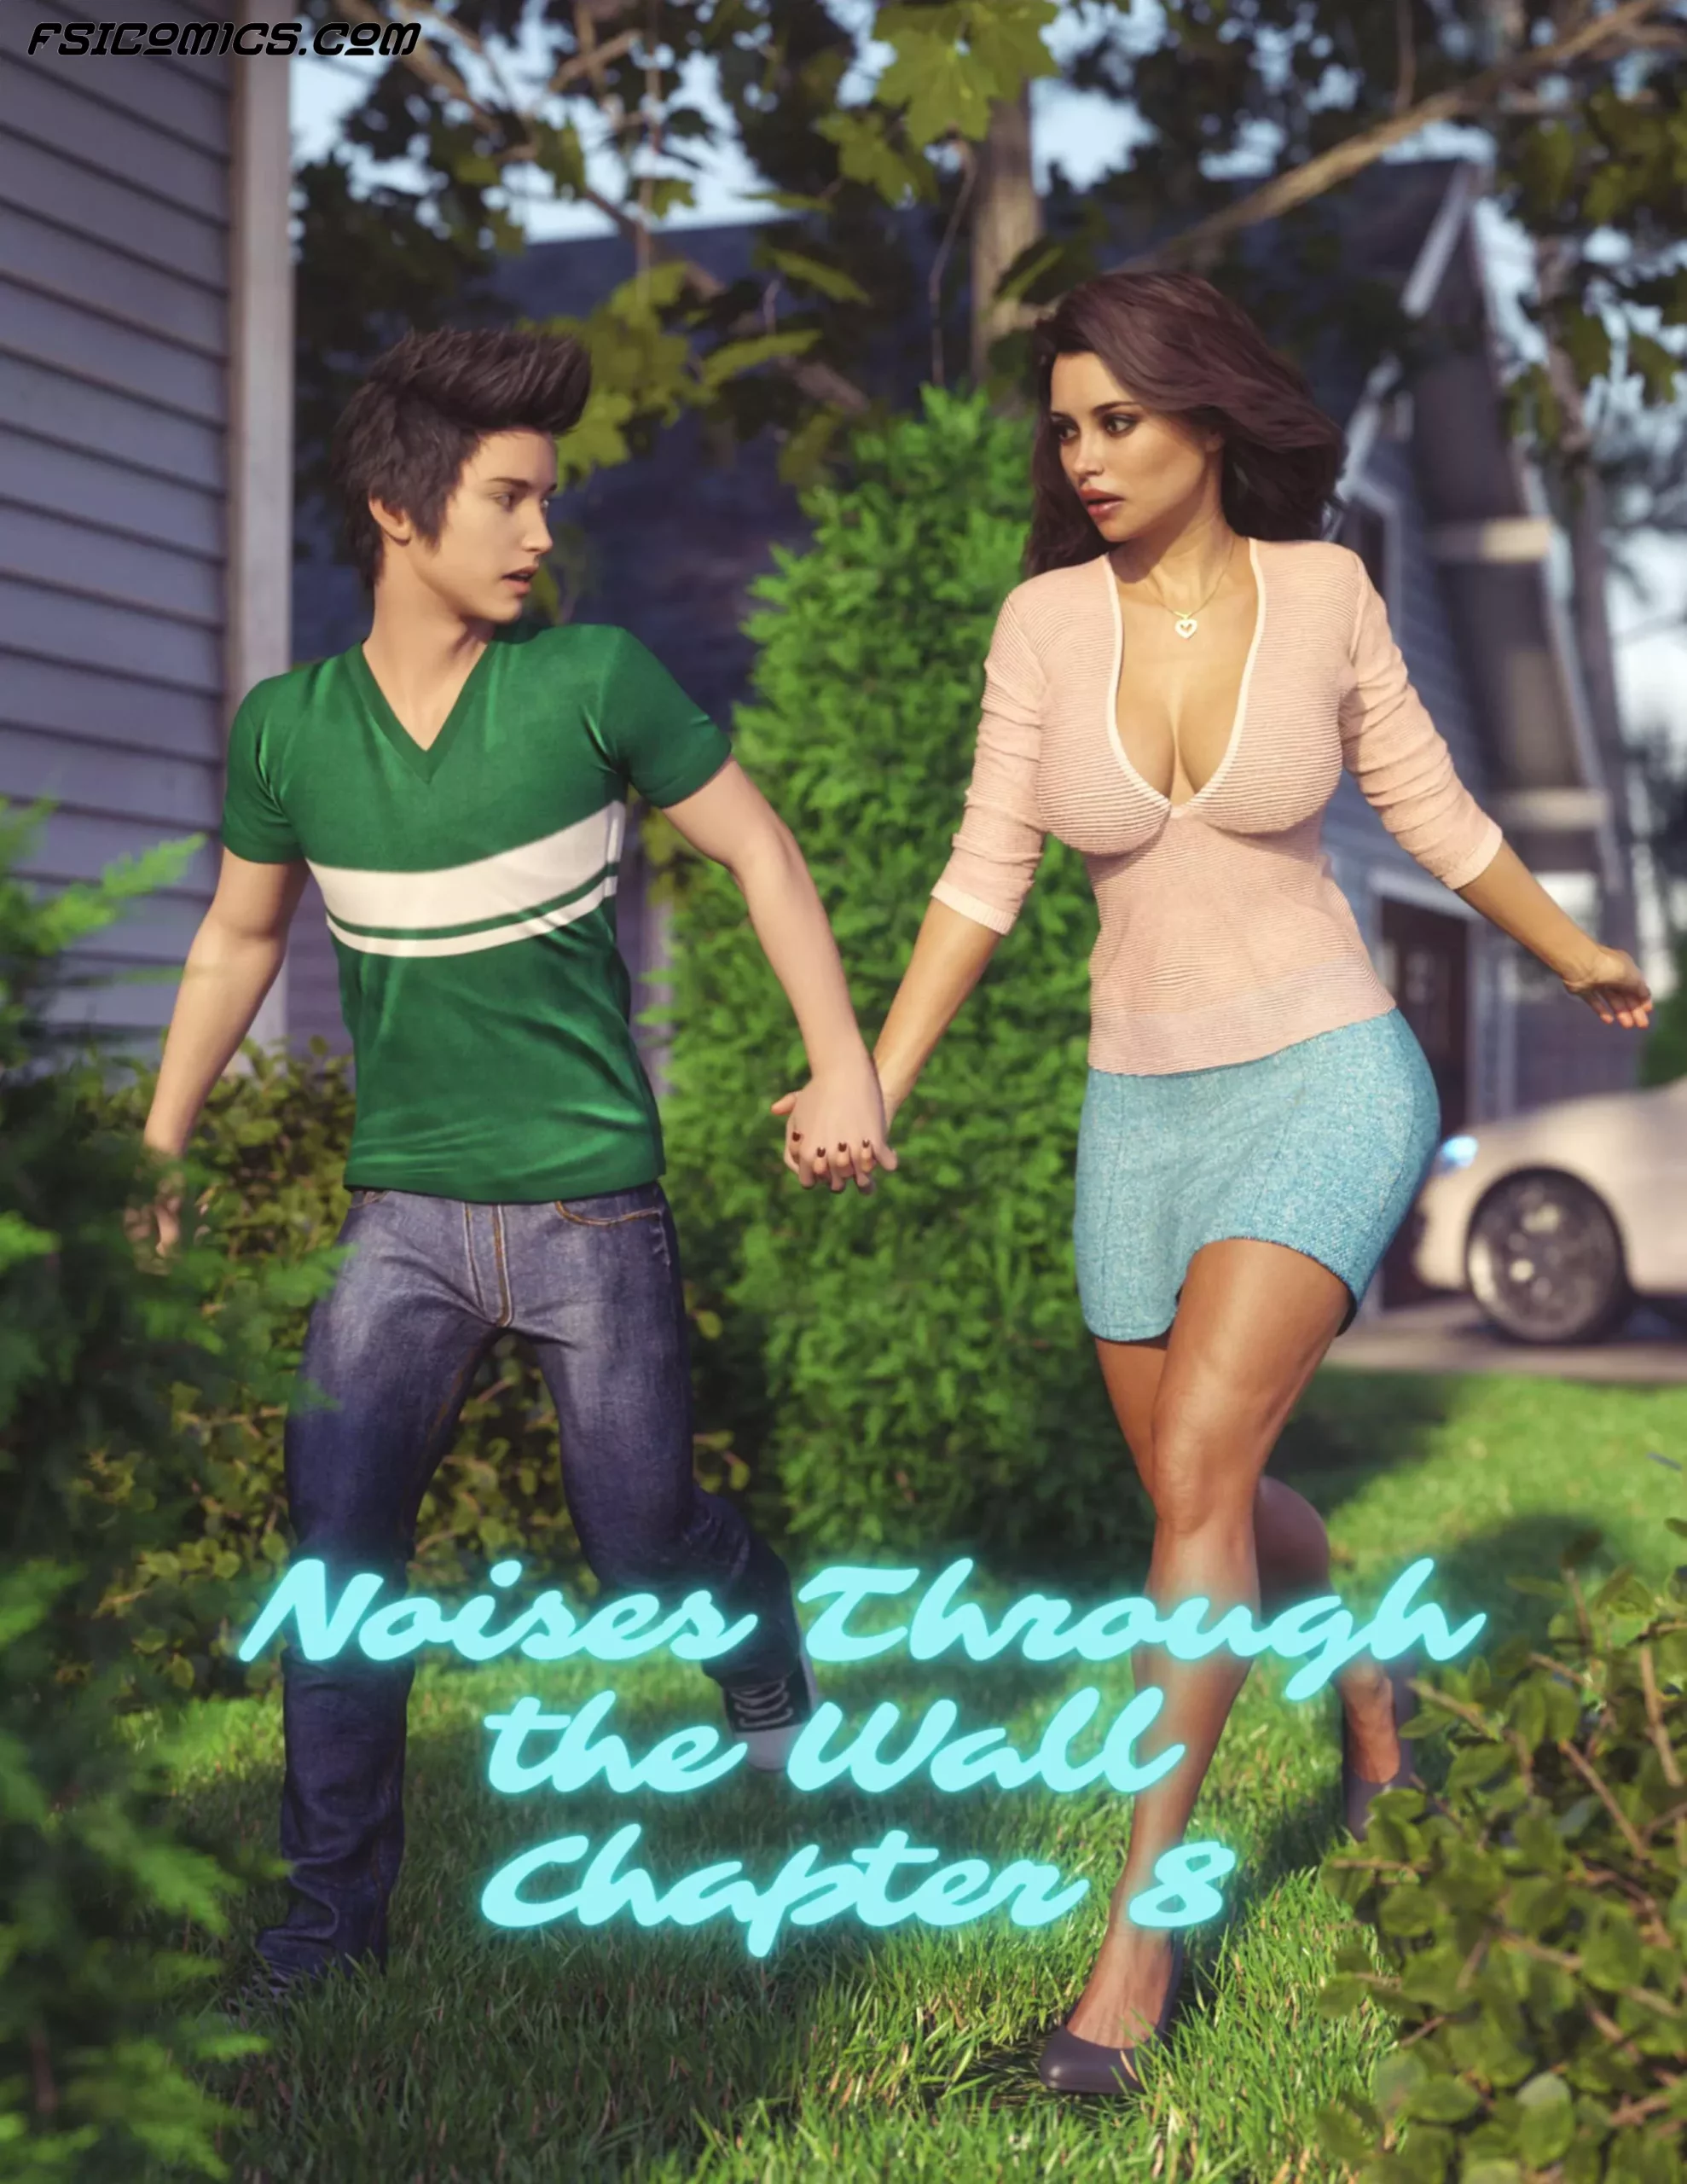 Noises Through The Wall Chapter 8 - Lexx228 - 61 - Fsicomics